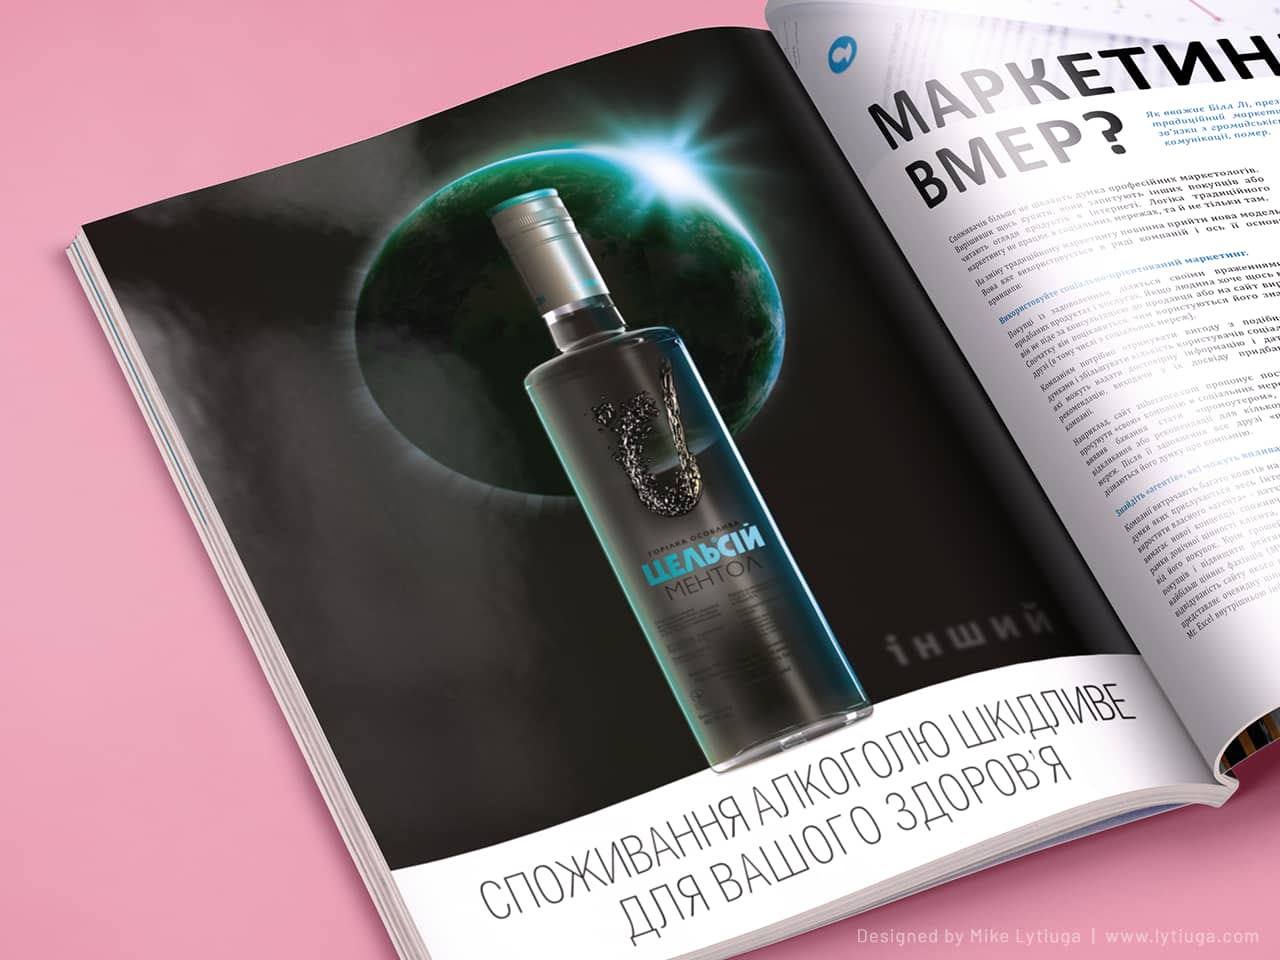 Print AD for Celsiy mint-flavored vodka